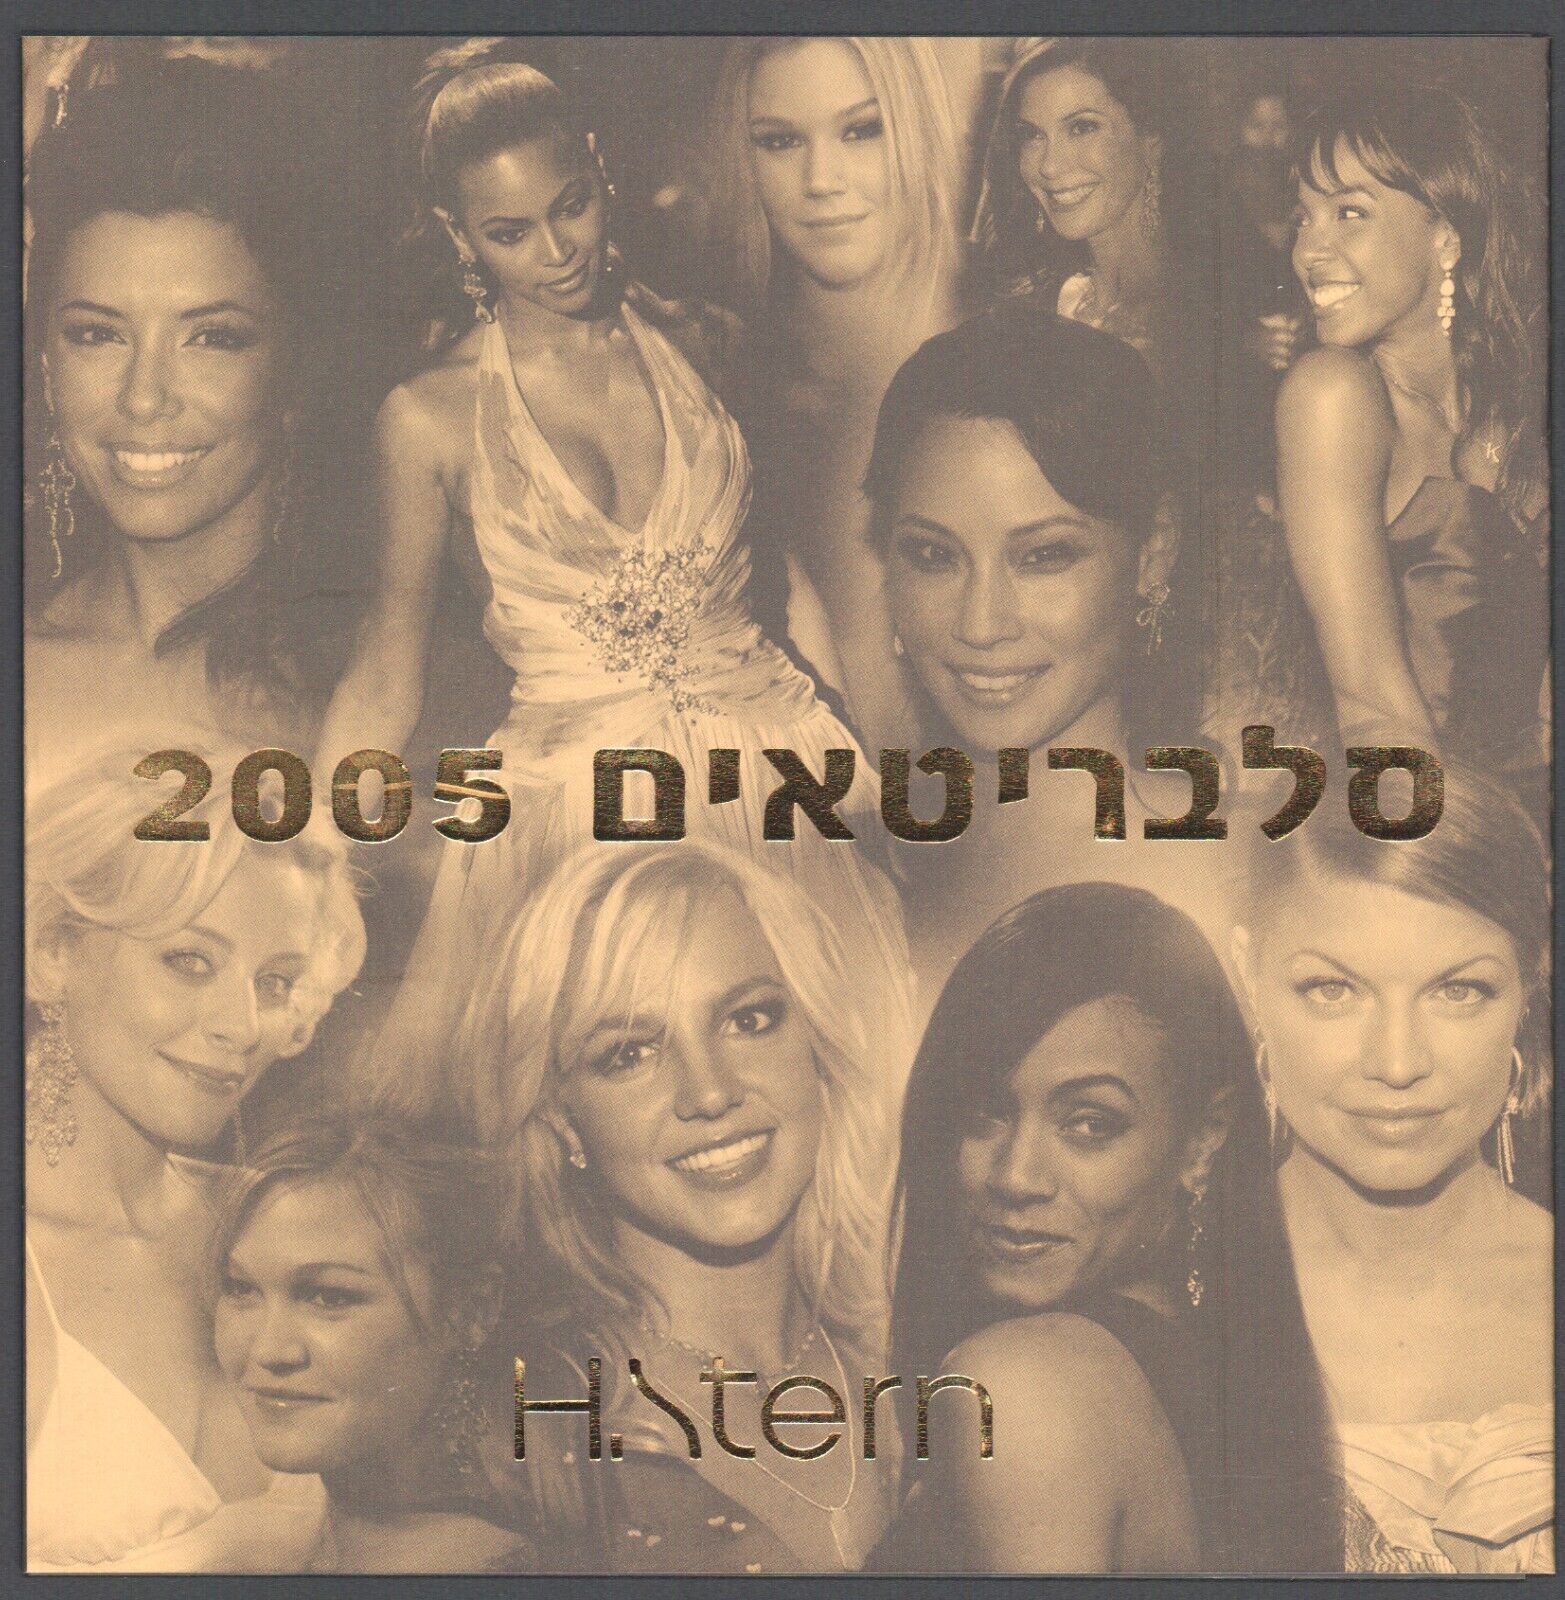 H. Stern Celebs & jewelry CATALOG 2005 ISRAEL Hebrew Beyoncé, Britney Spears